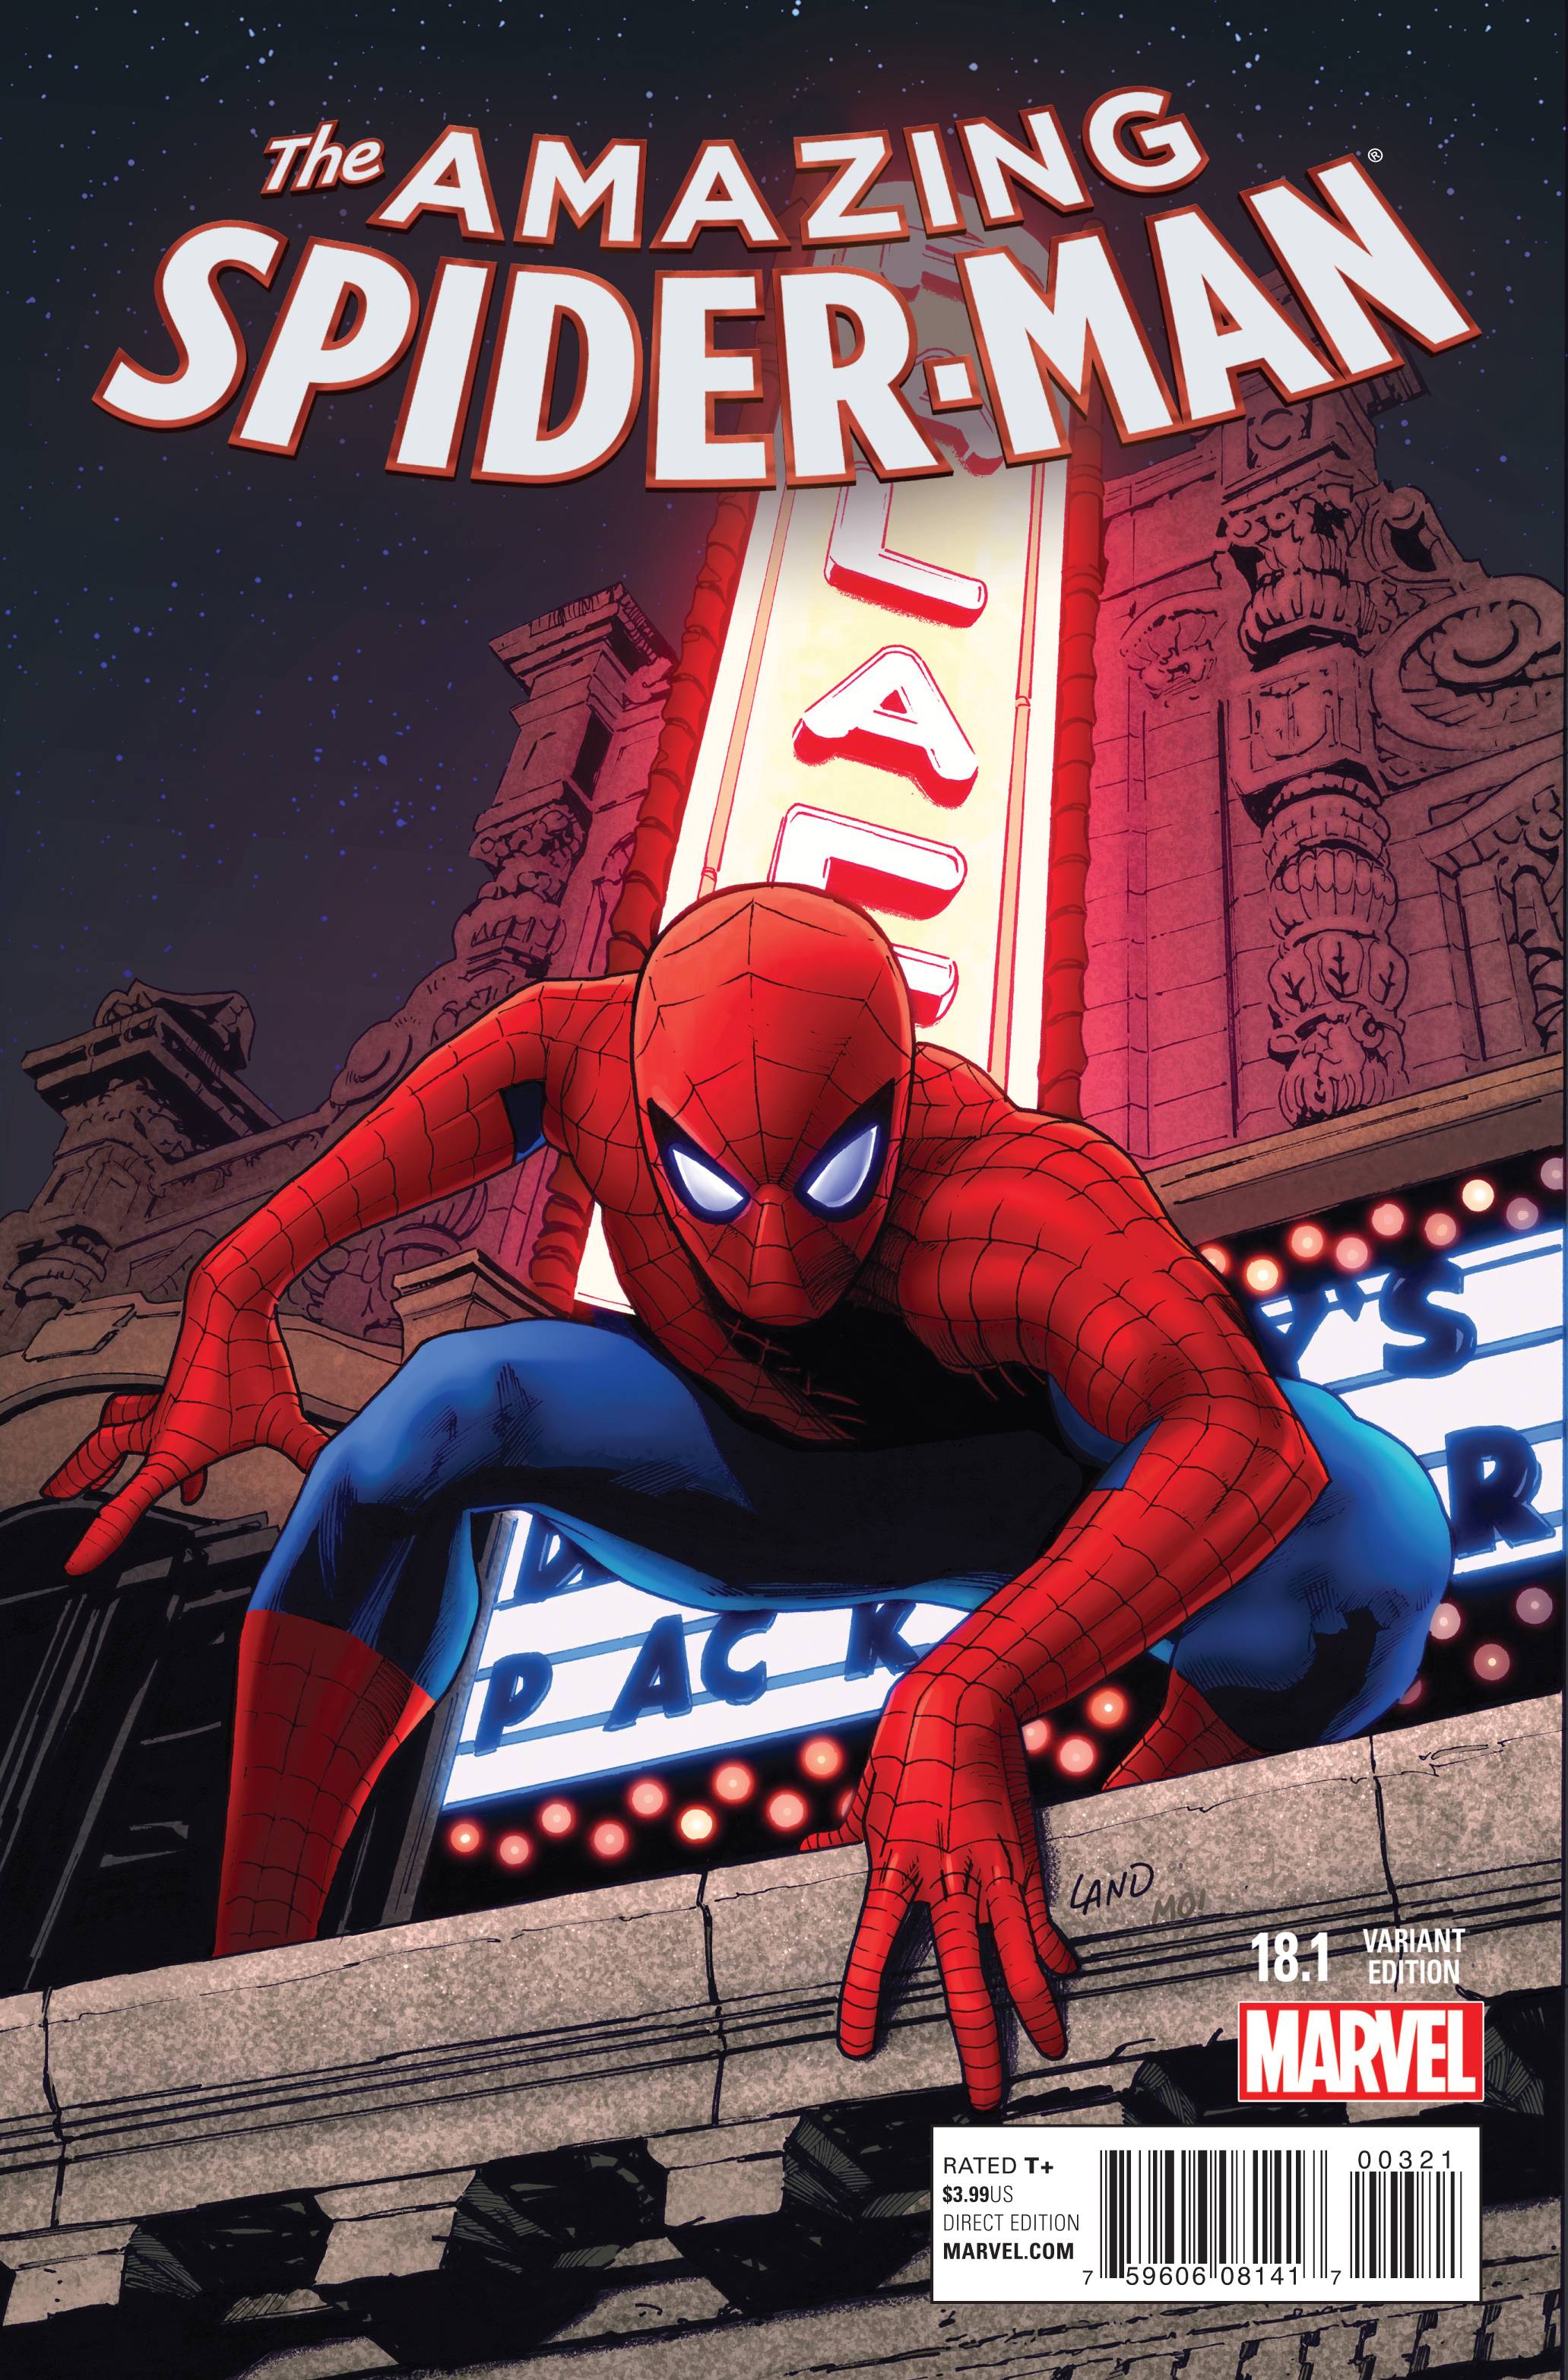 The Amazing Spider-Man #18.1 (Land Cover) | Fresh Comics